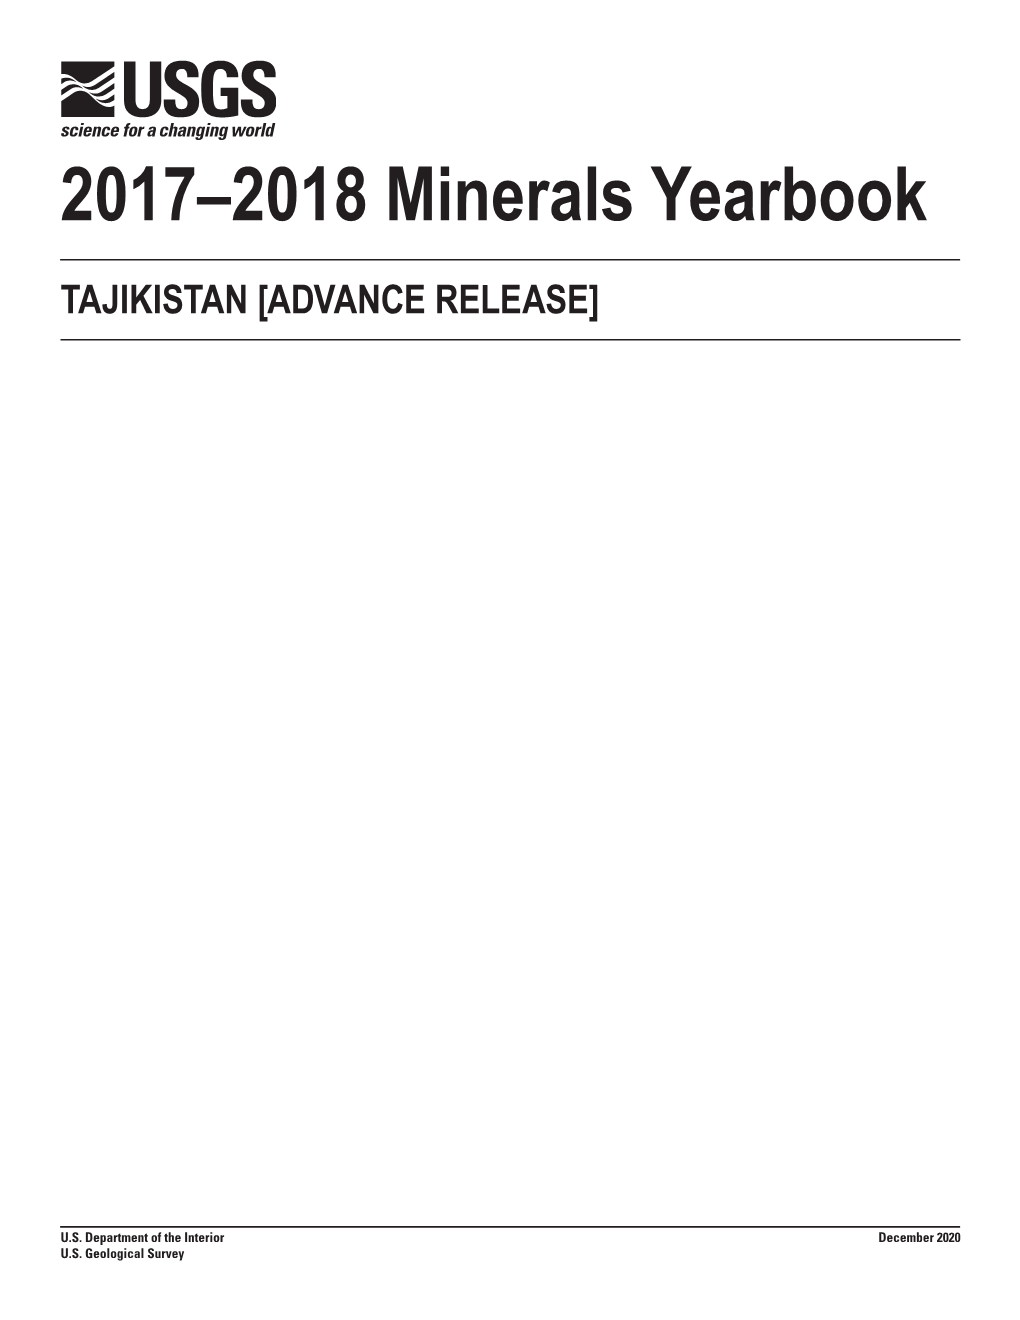 The Mineral Industry of Tajikistan in 2017-2018